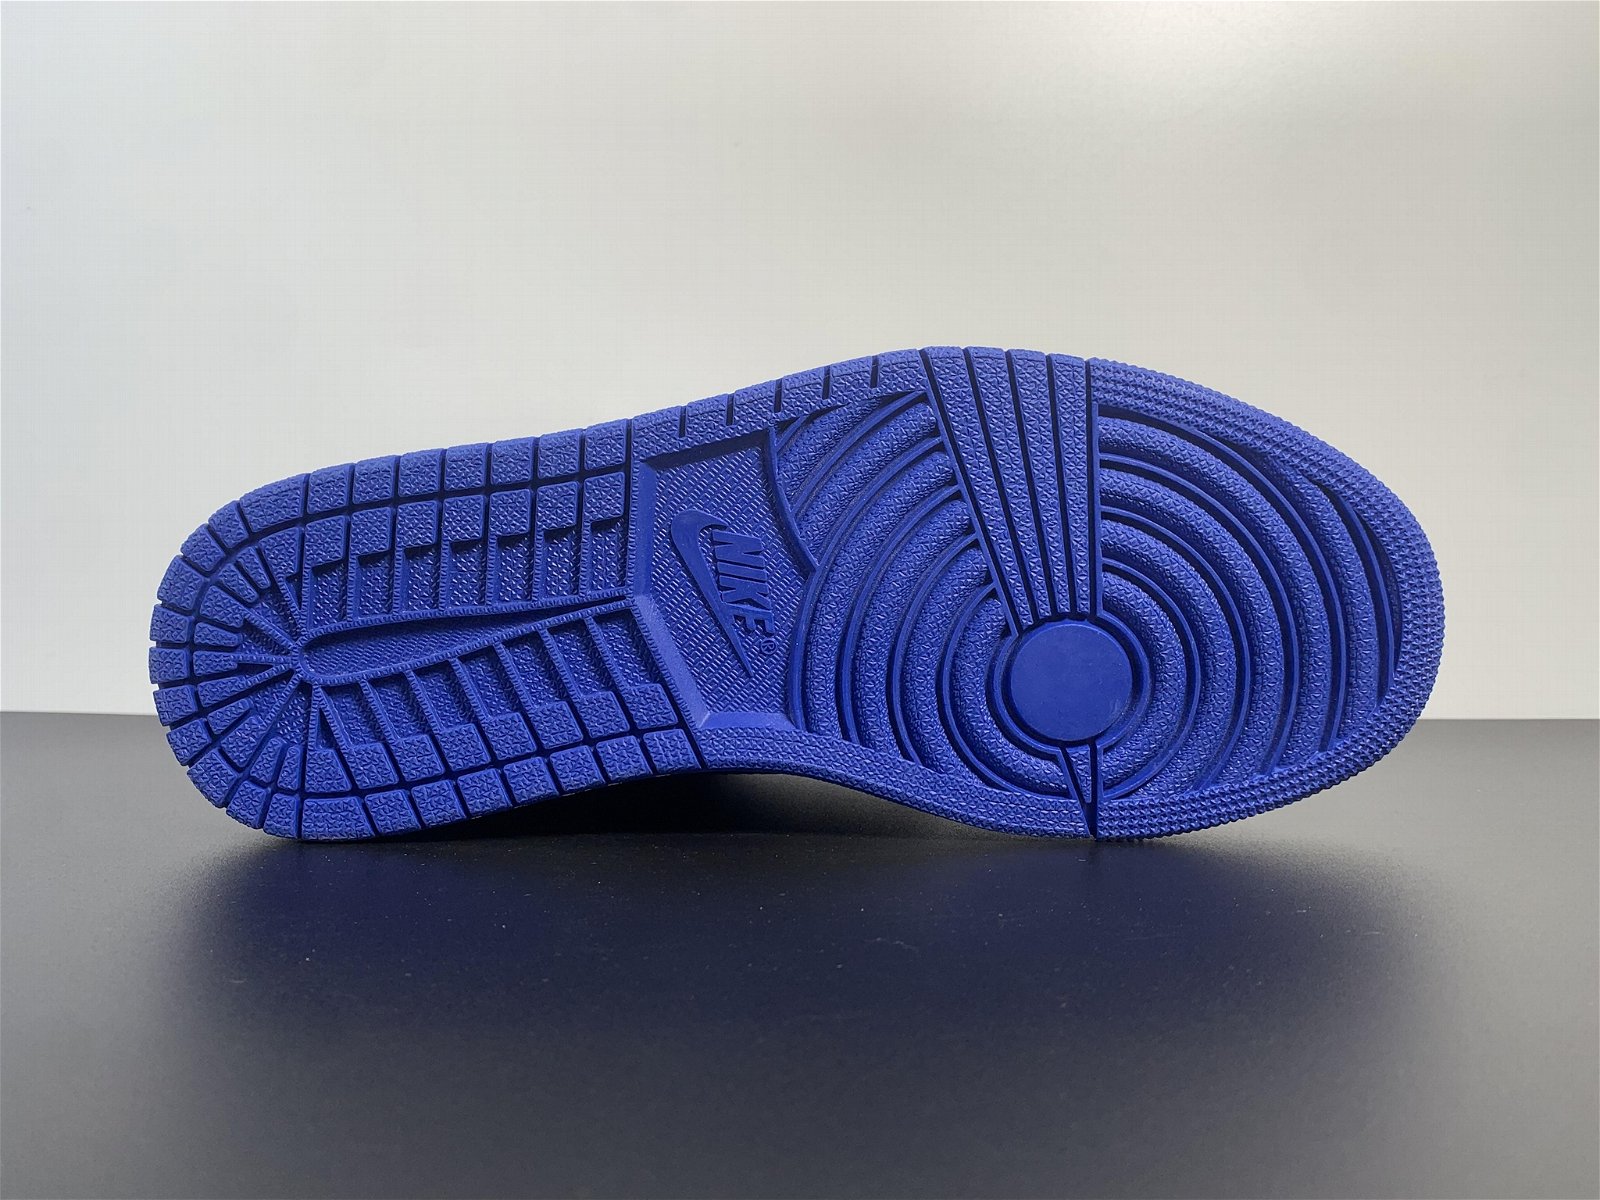 2022 AJ shoes AJ 1 Mirror black blue full code shipment number, 555088-404 5